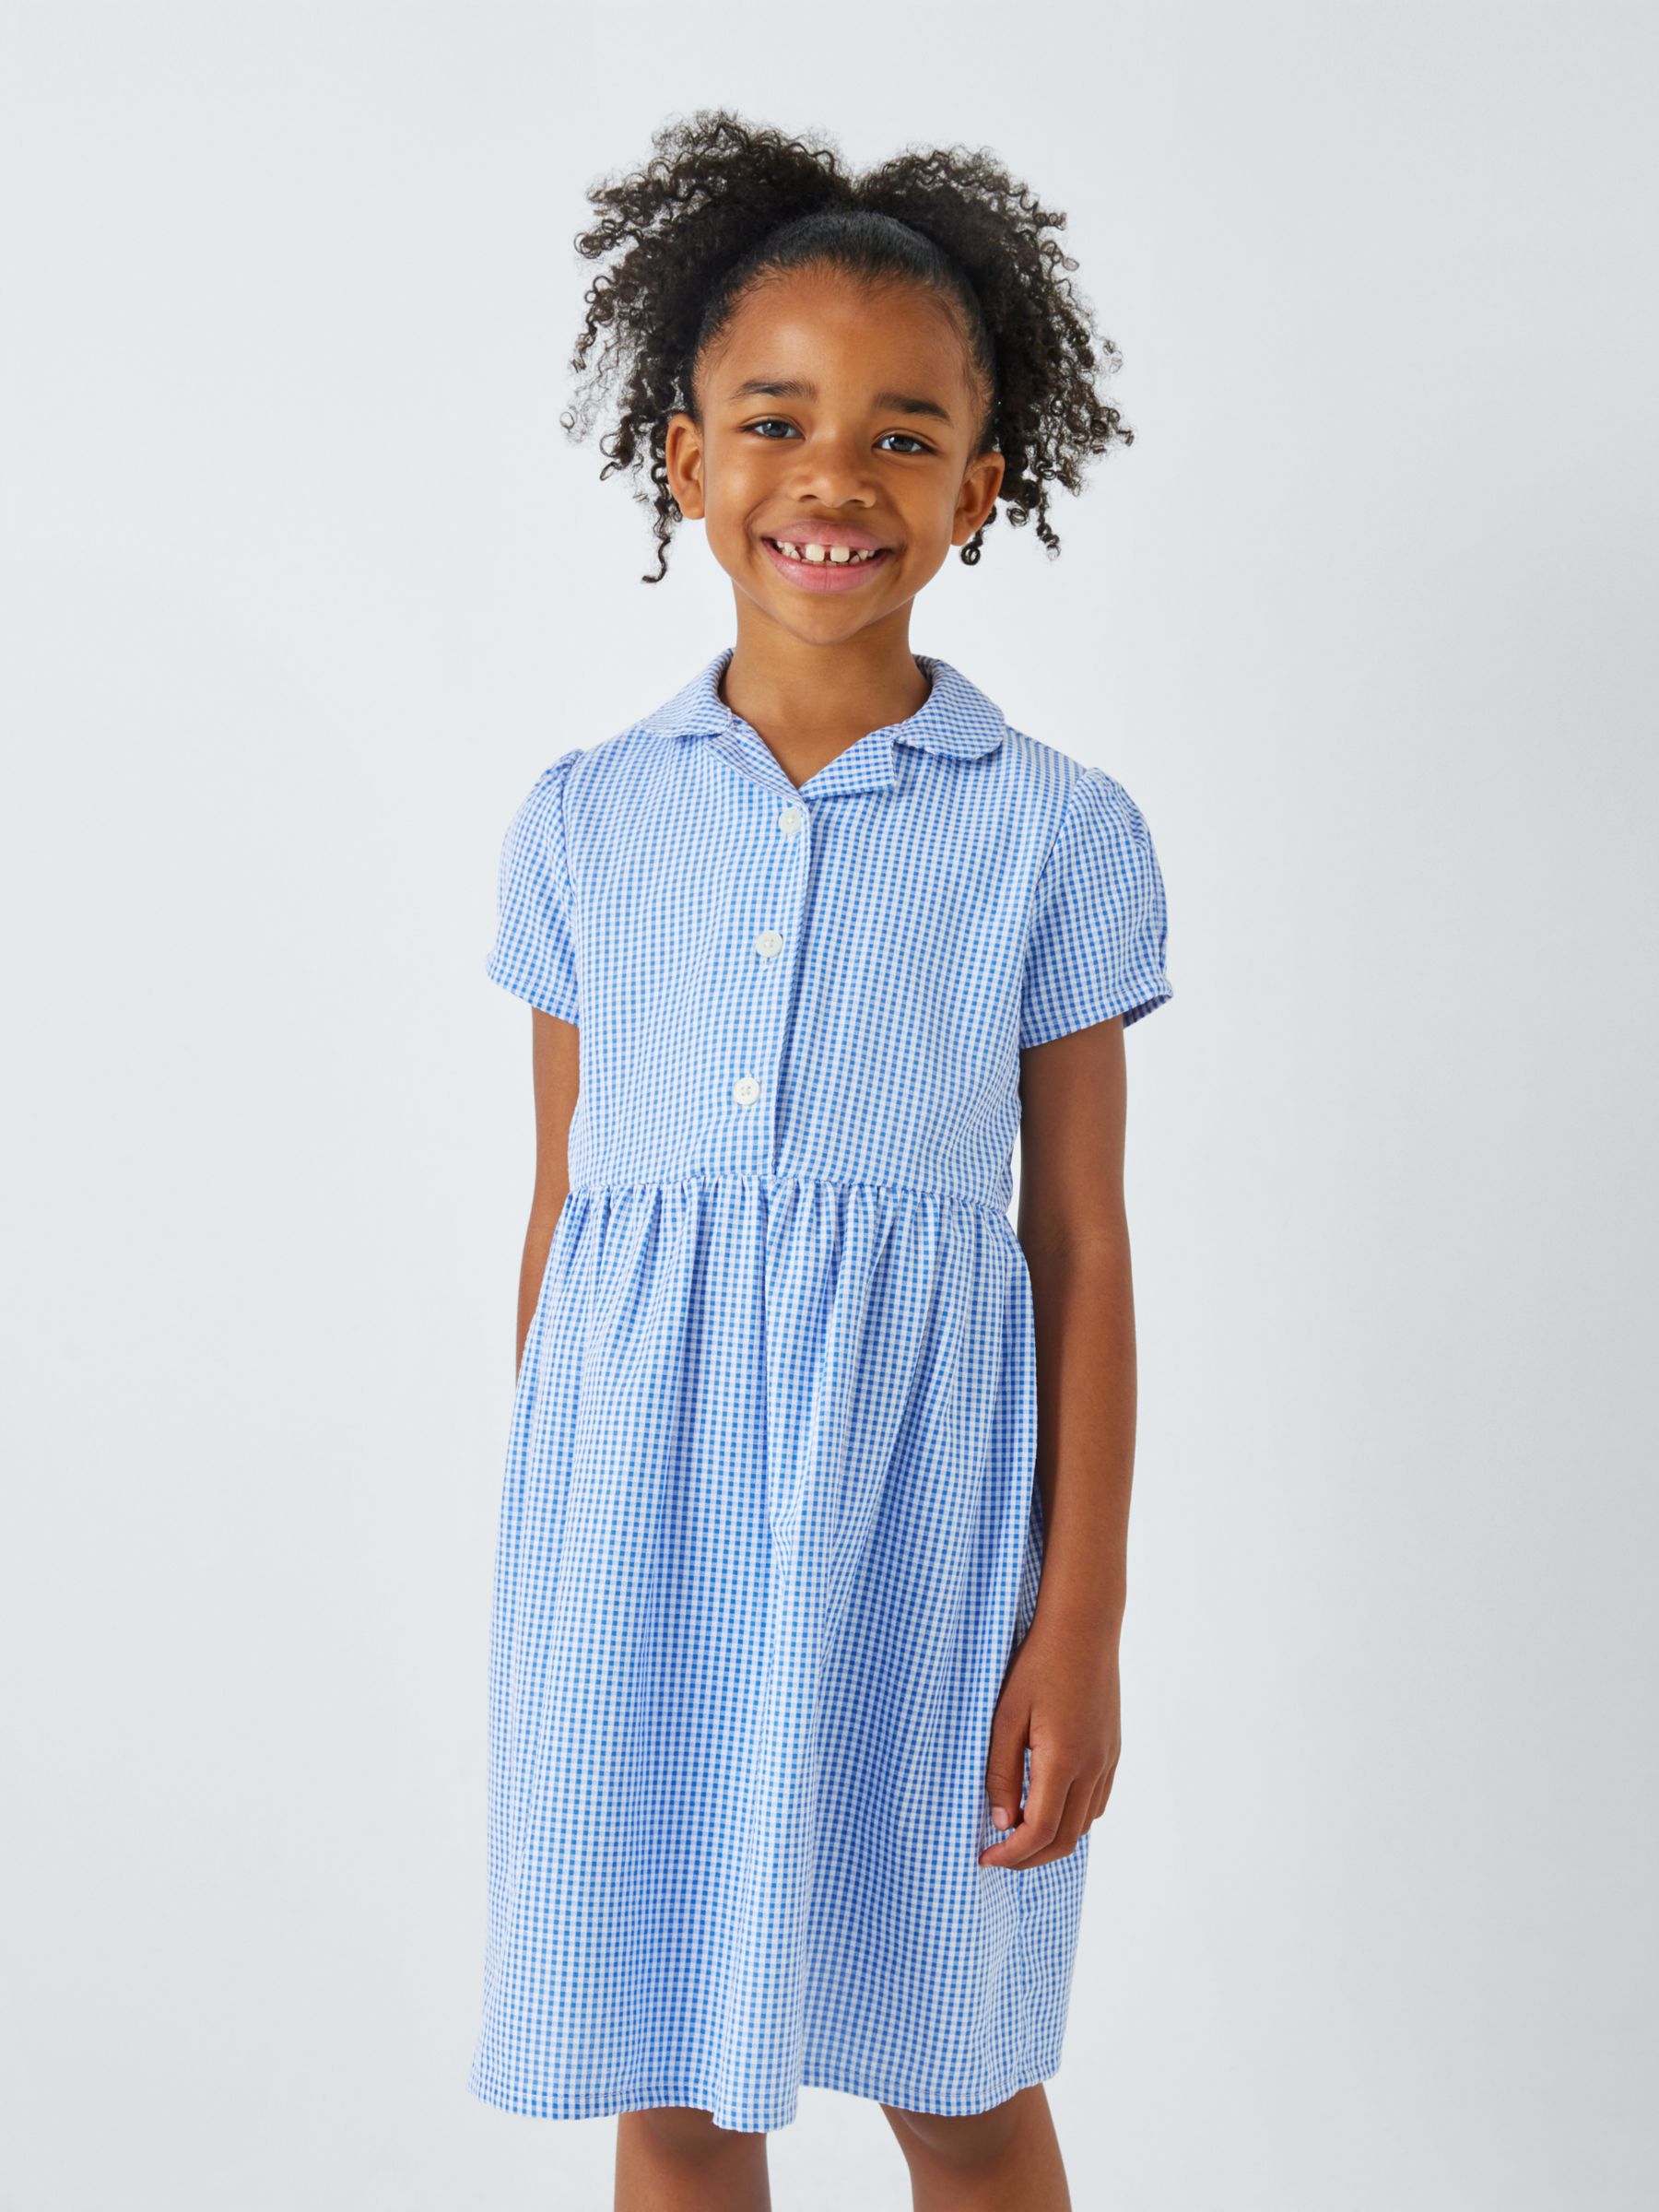 Buy John Lewis ANYDAY Kids' Gingham School Summer Dress, Pack of 2 Online at johnlewis.com